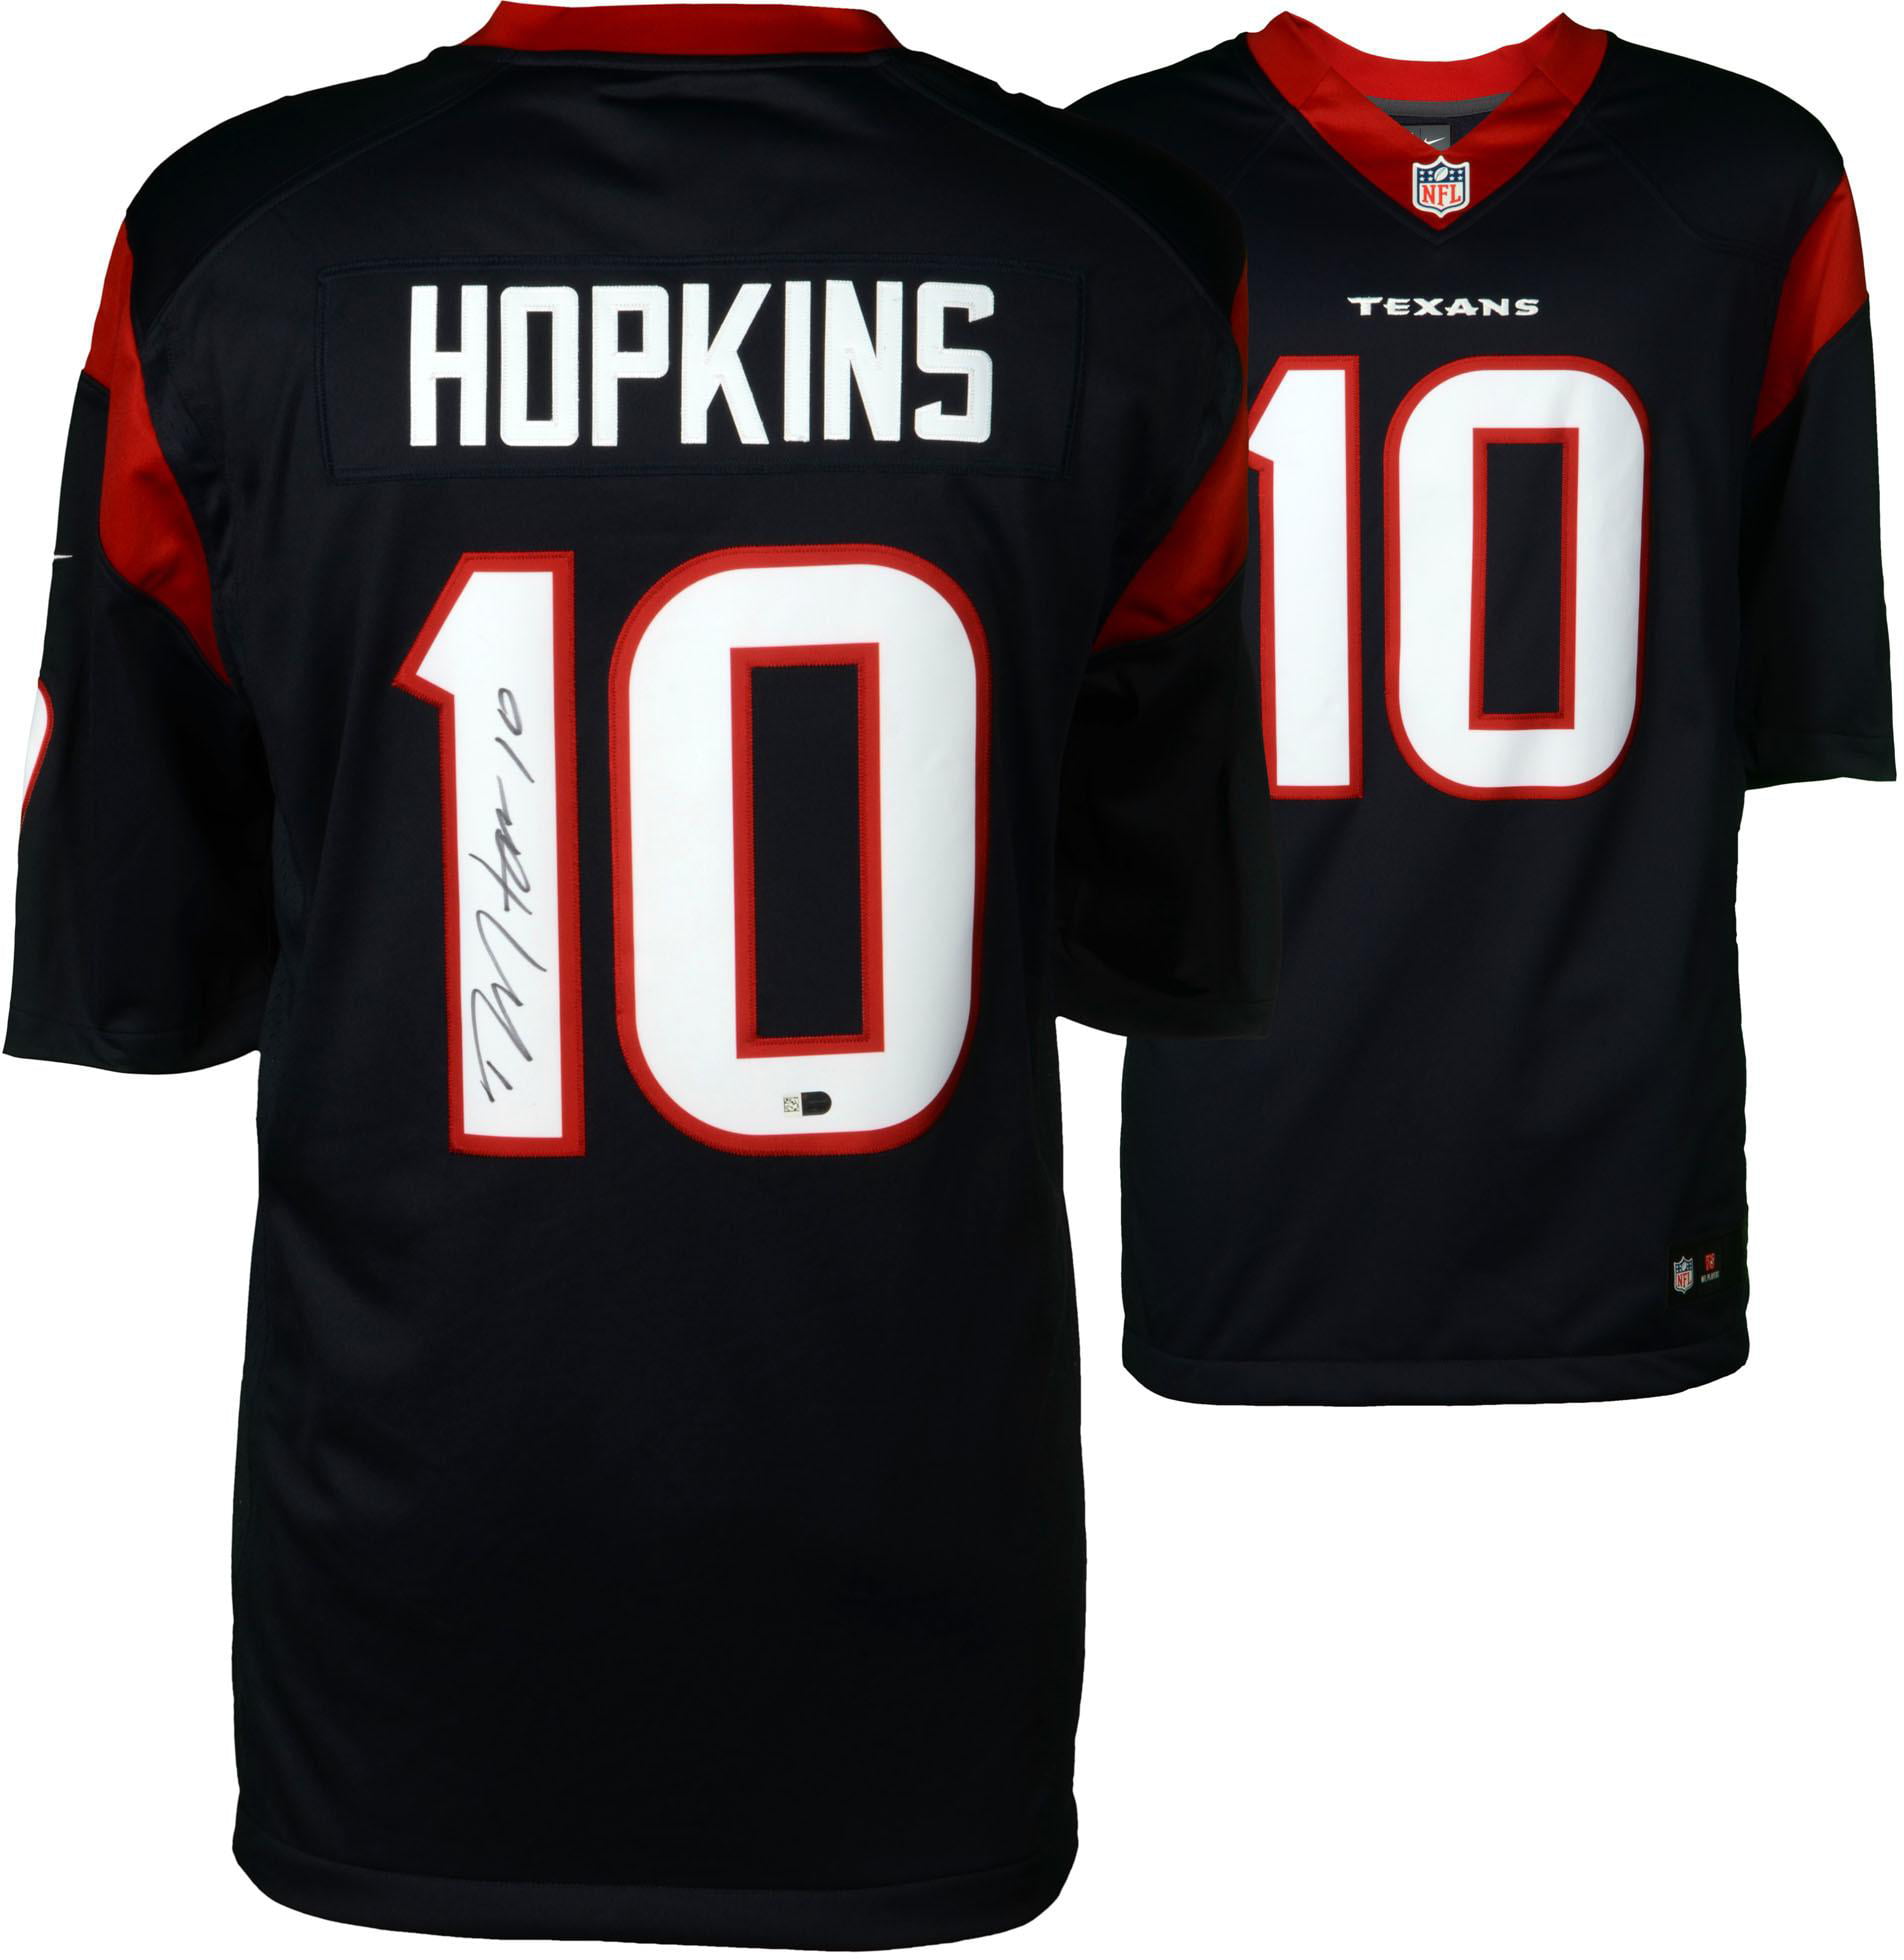 deandre hopkins texans jersey